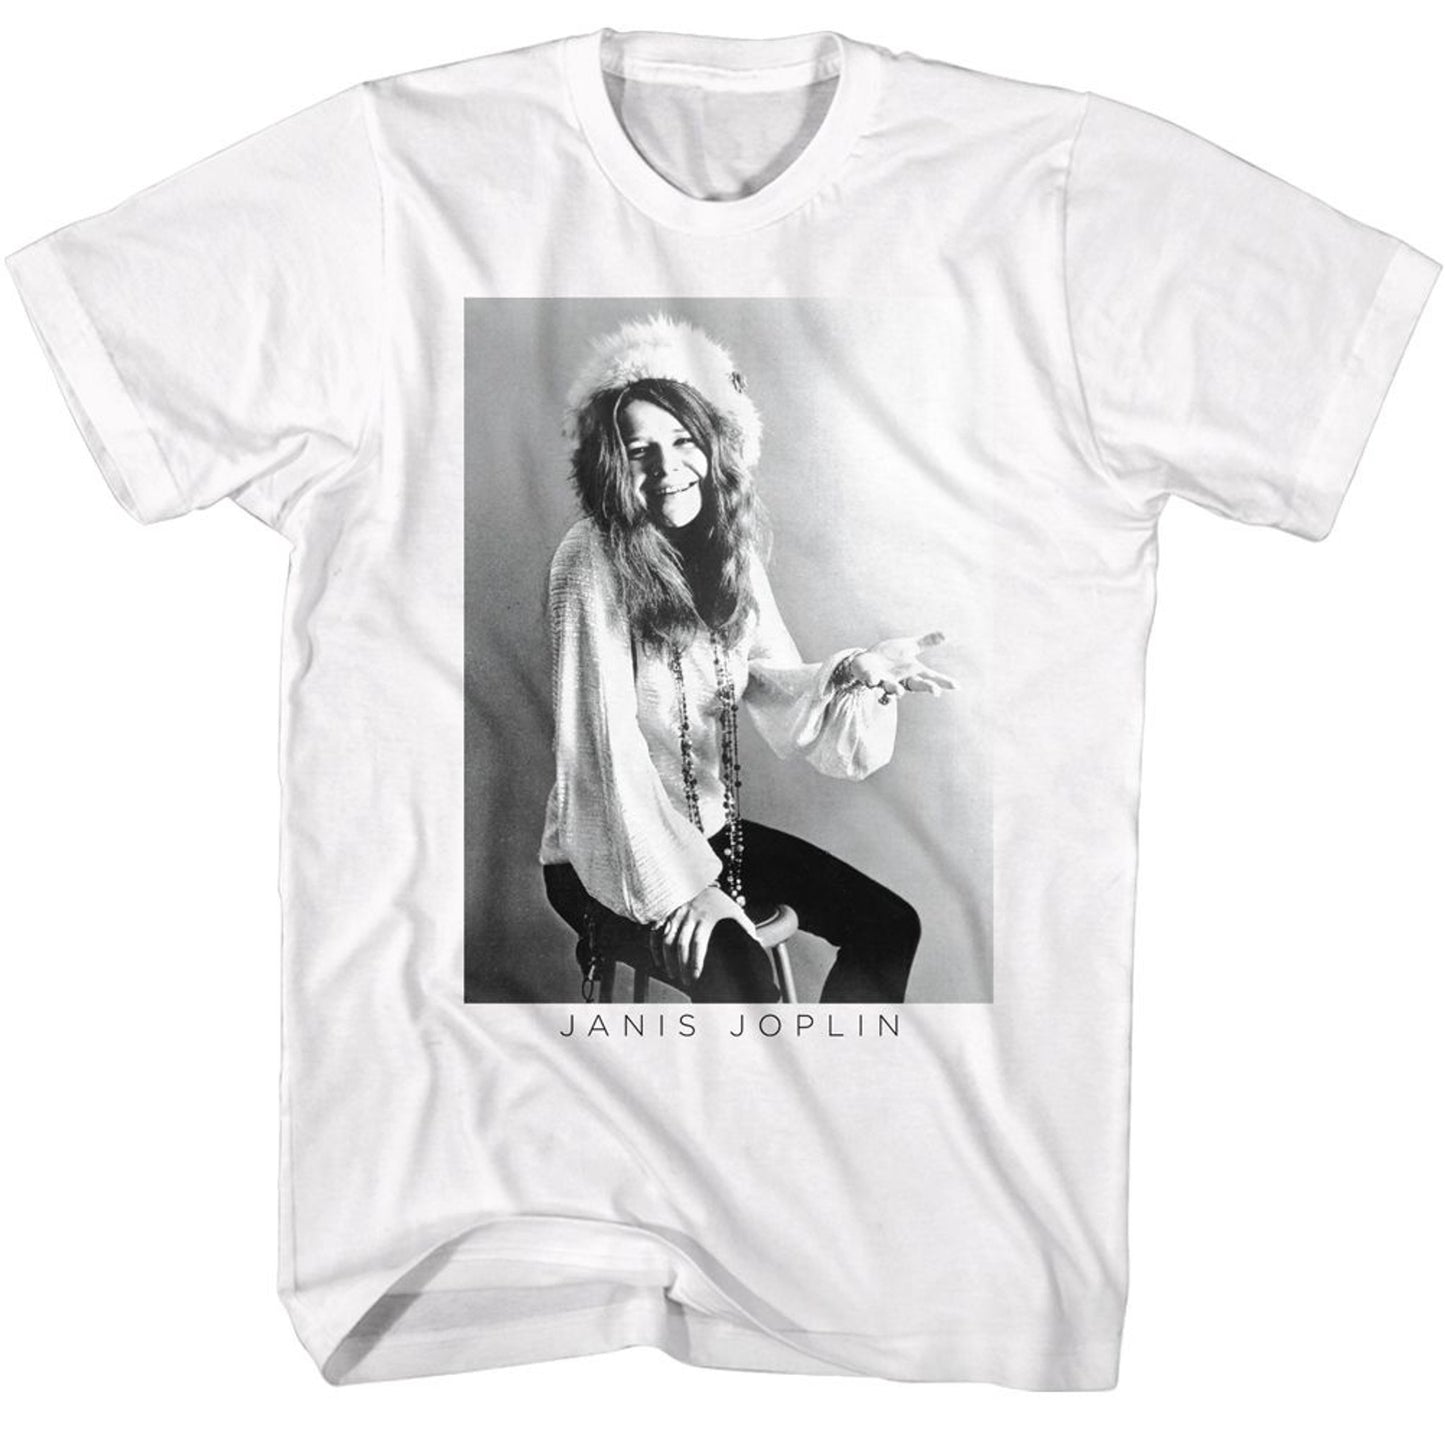 Janis Joplin Portrait T-Shirt